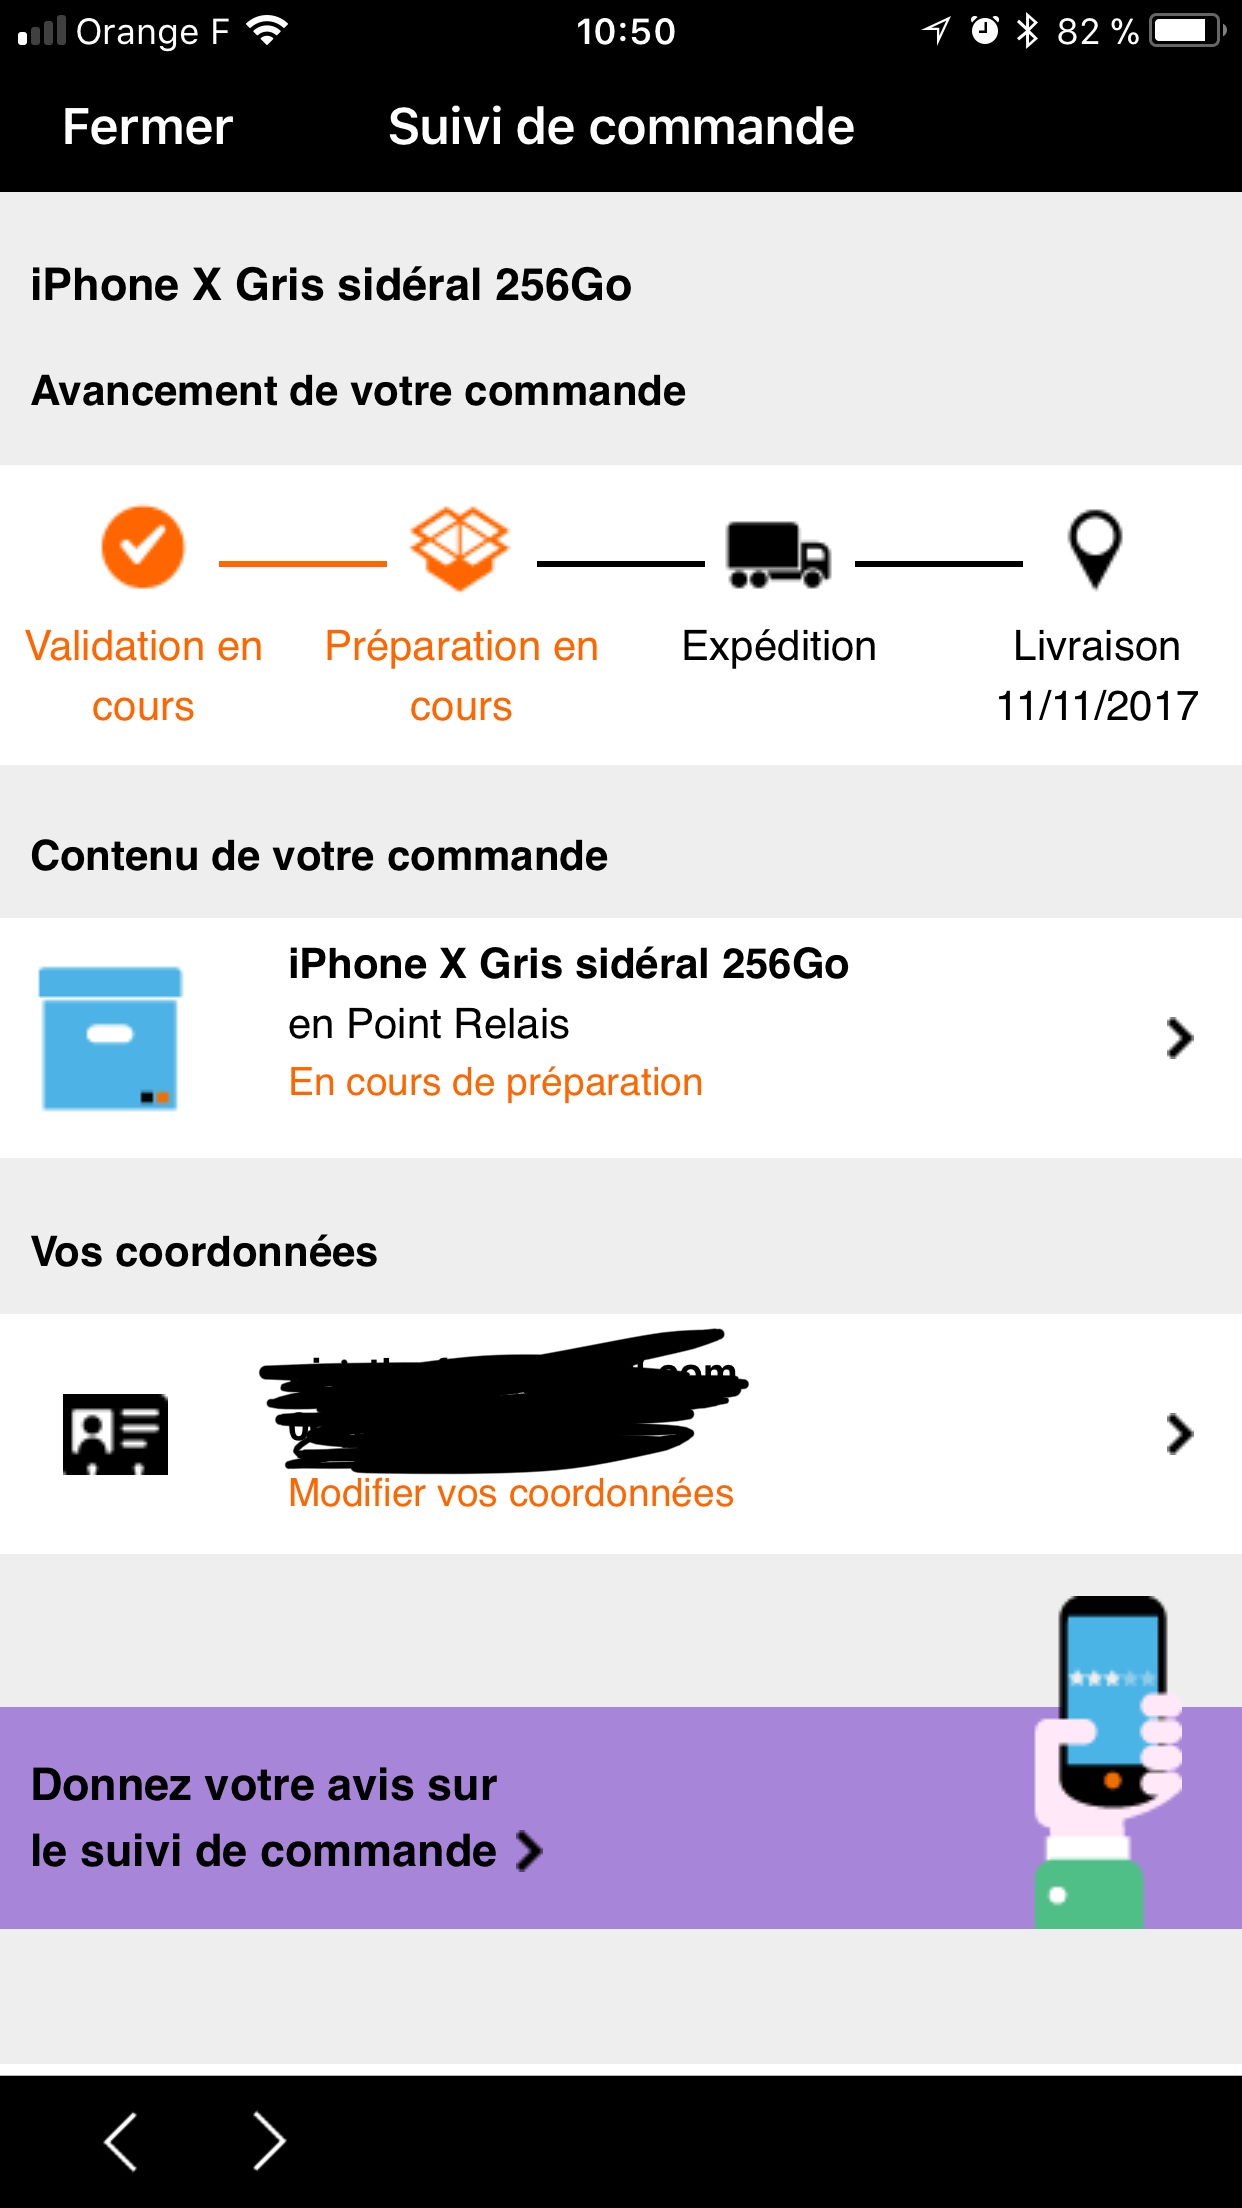 Iphone X - Page 11 - Communauté Orange